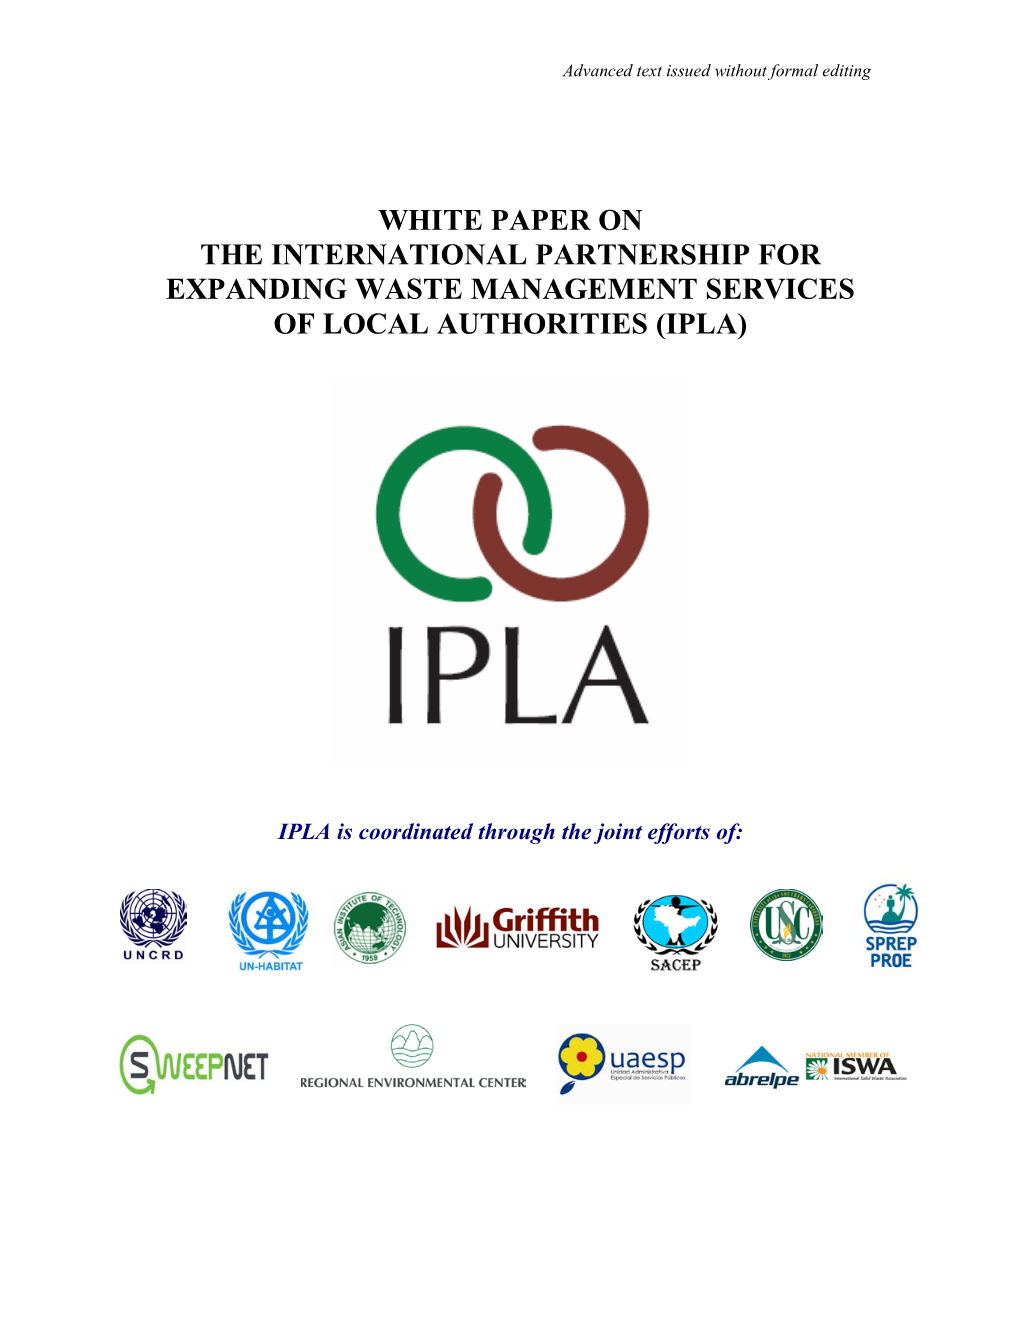 White Paper on IPLA